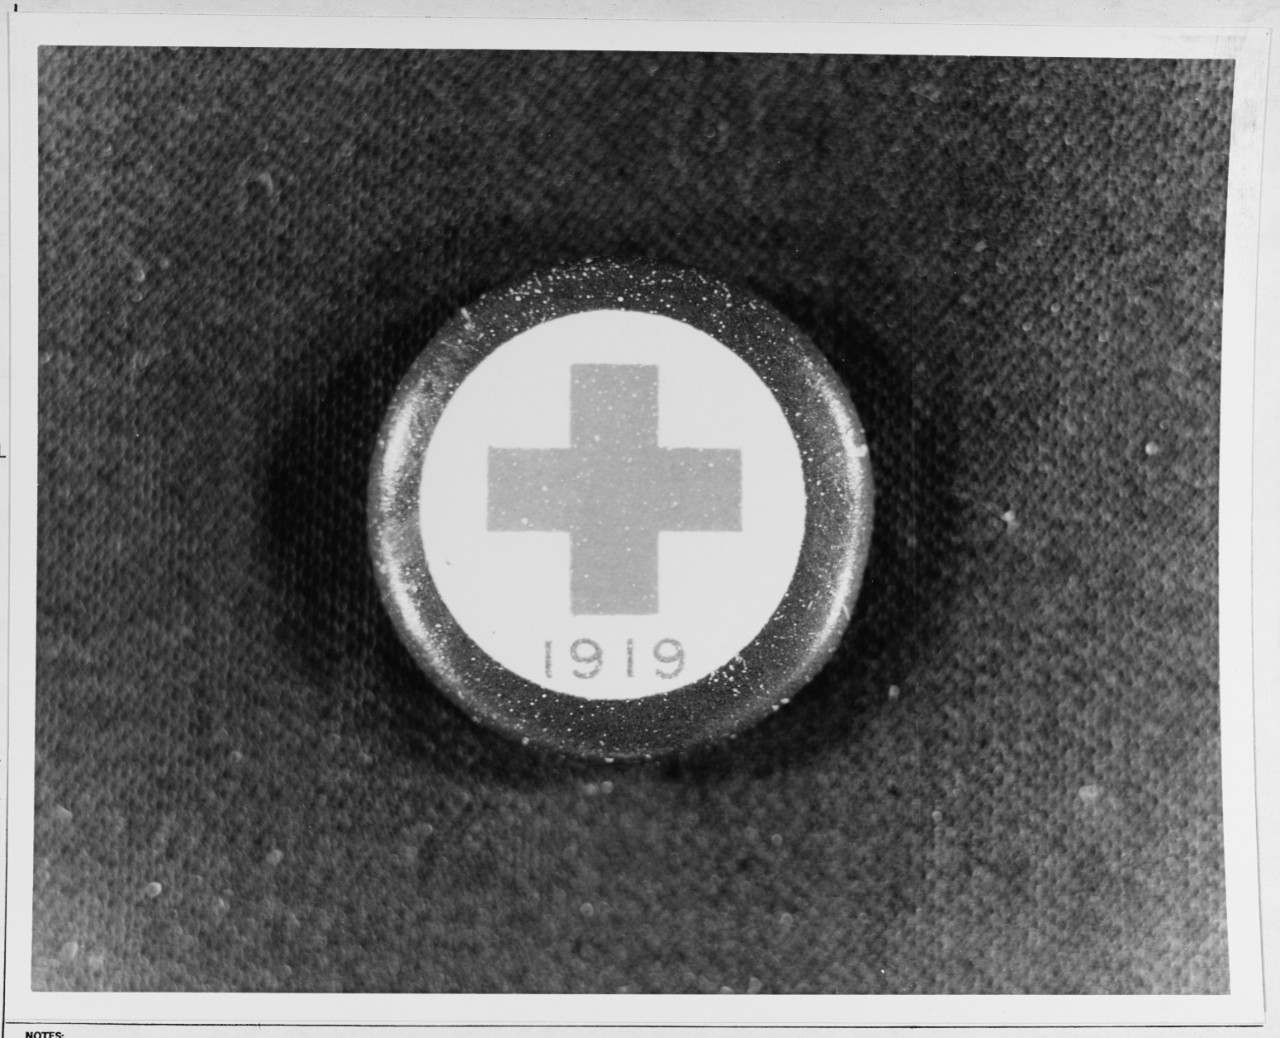 1919 Red Cross pin